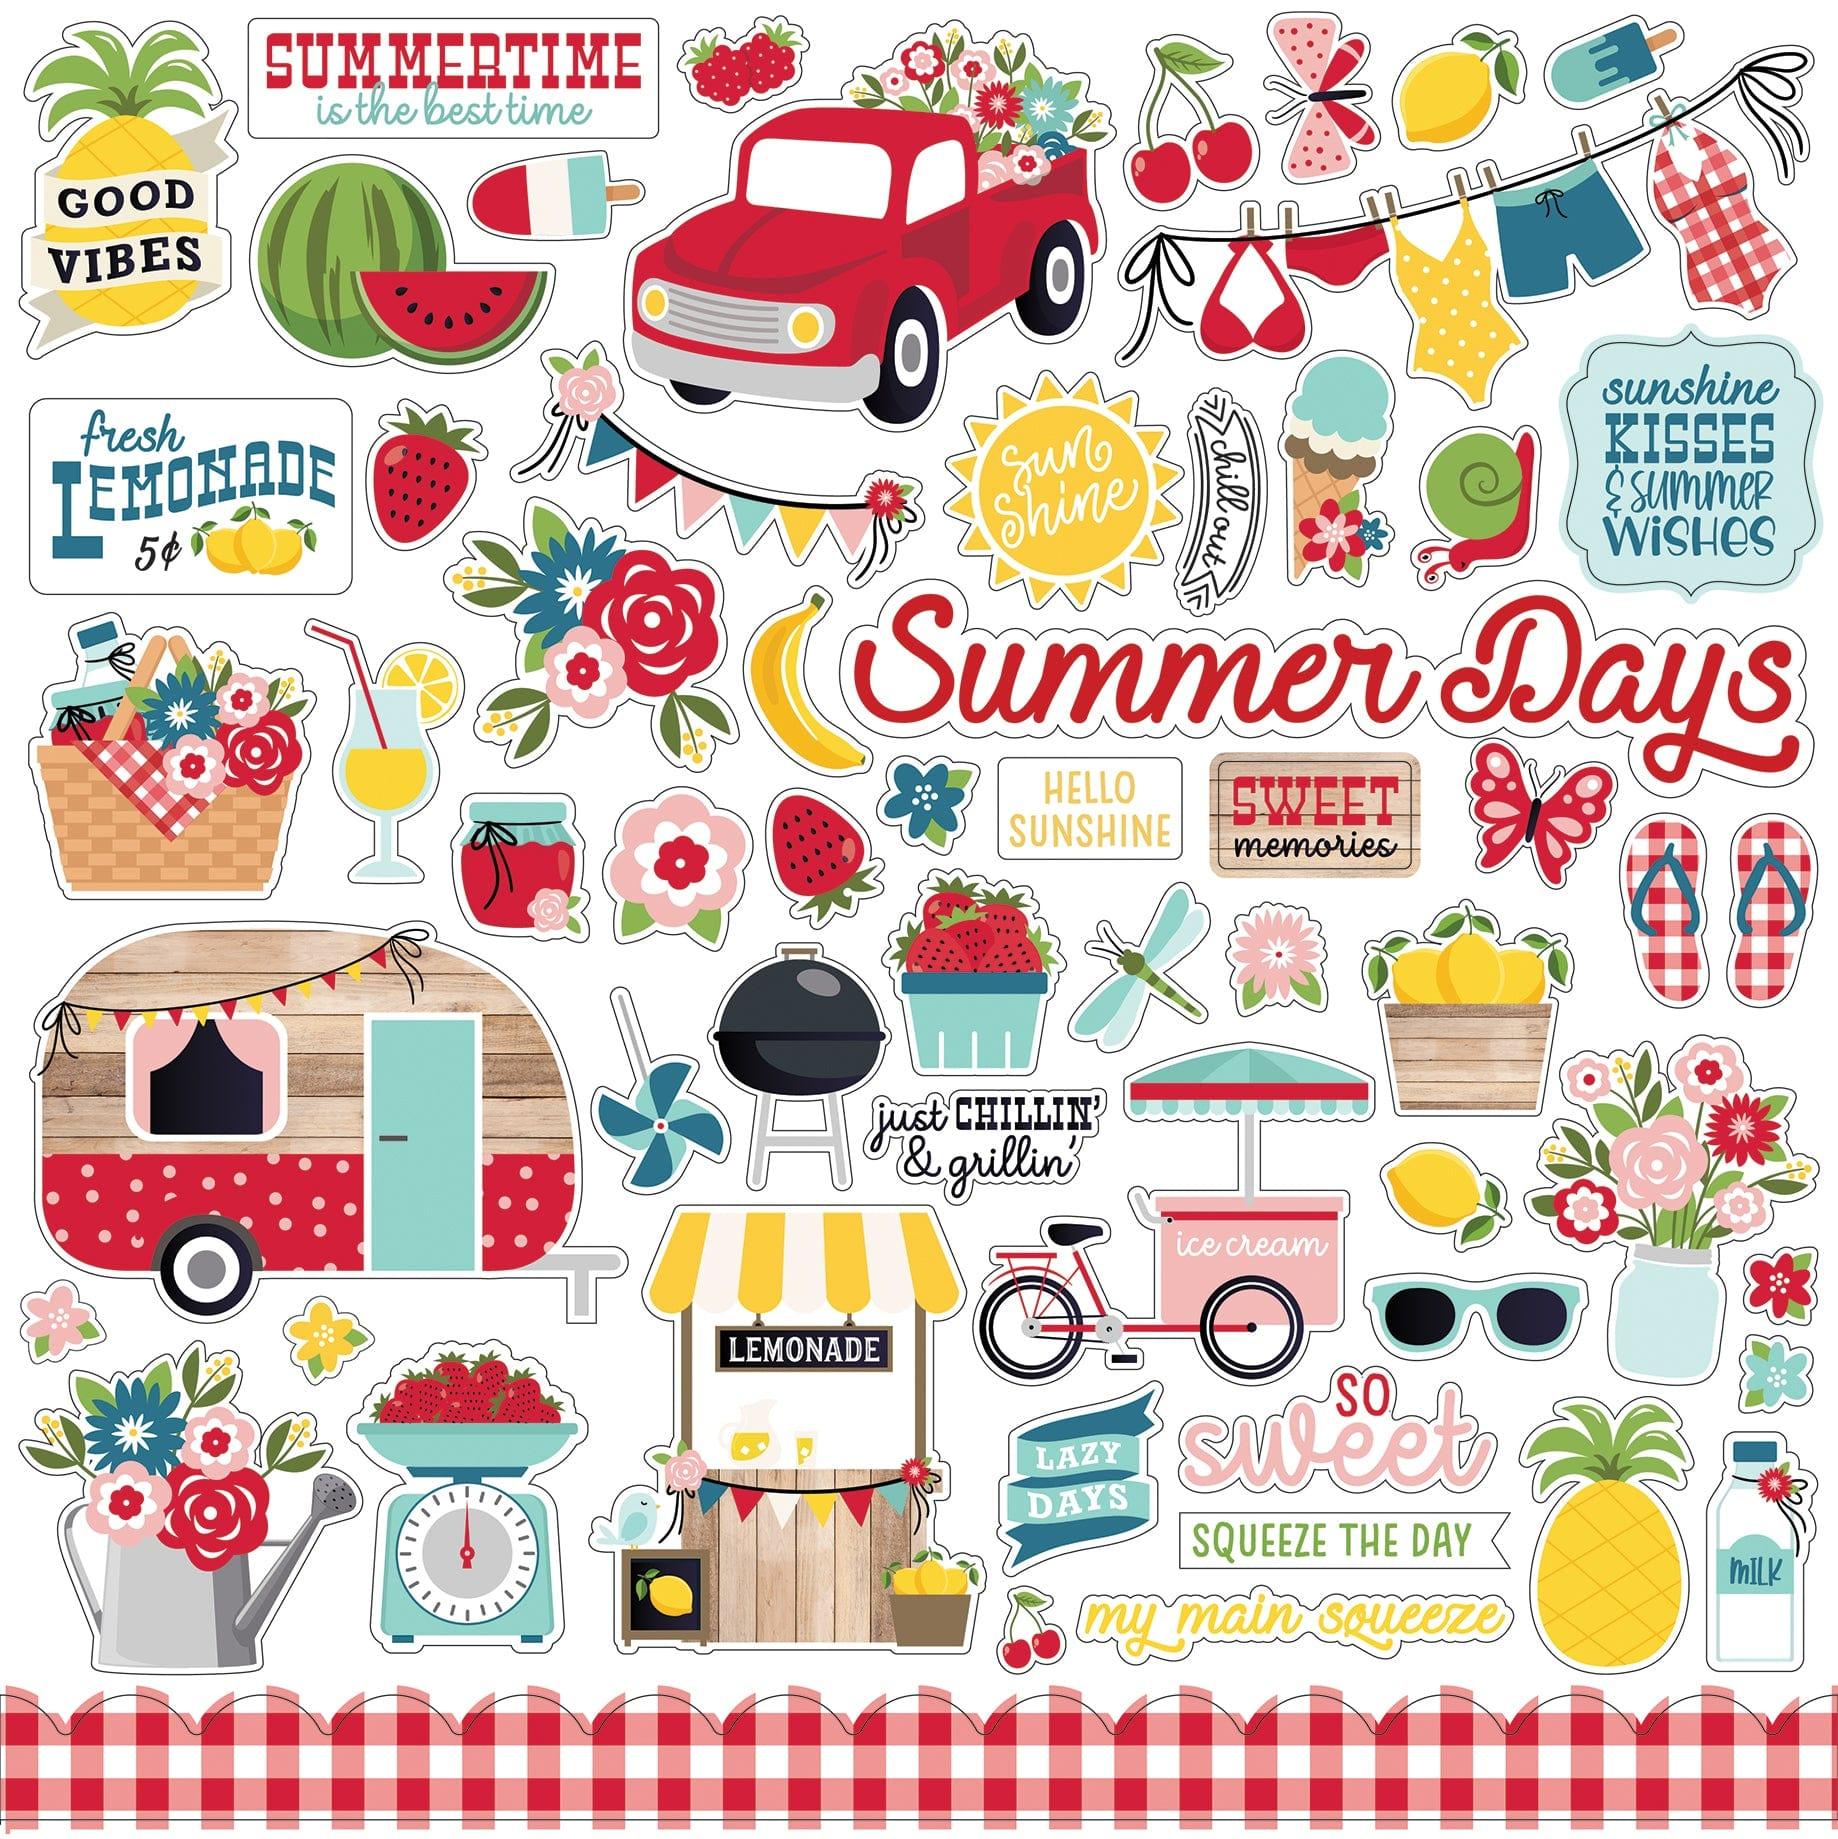 Slice of Summer Collection 12 x 12 Scrapbook Sticker Sheet by Echo Park Paper - Scrapbook Supply Companies